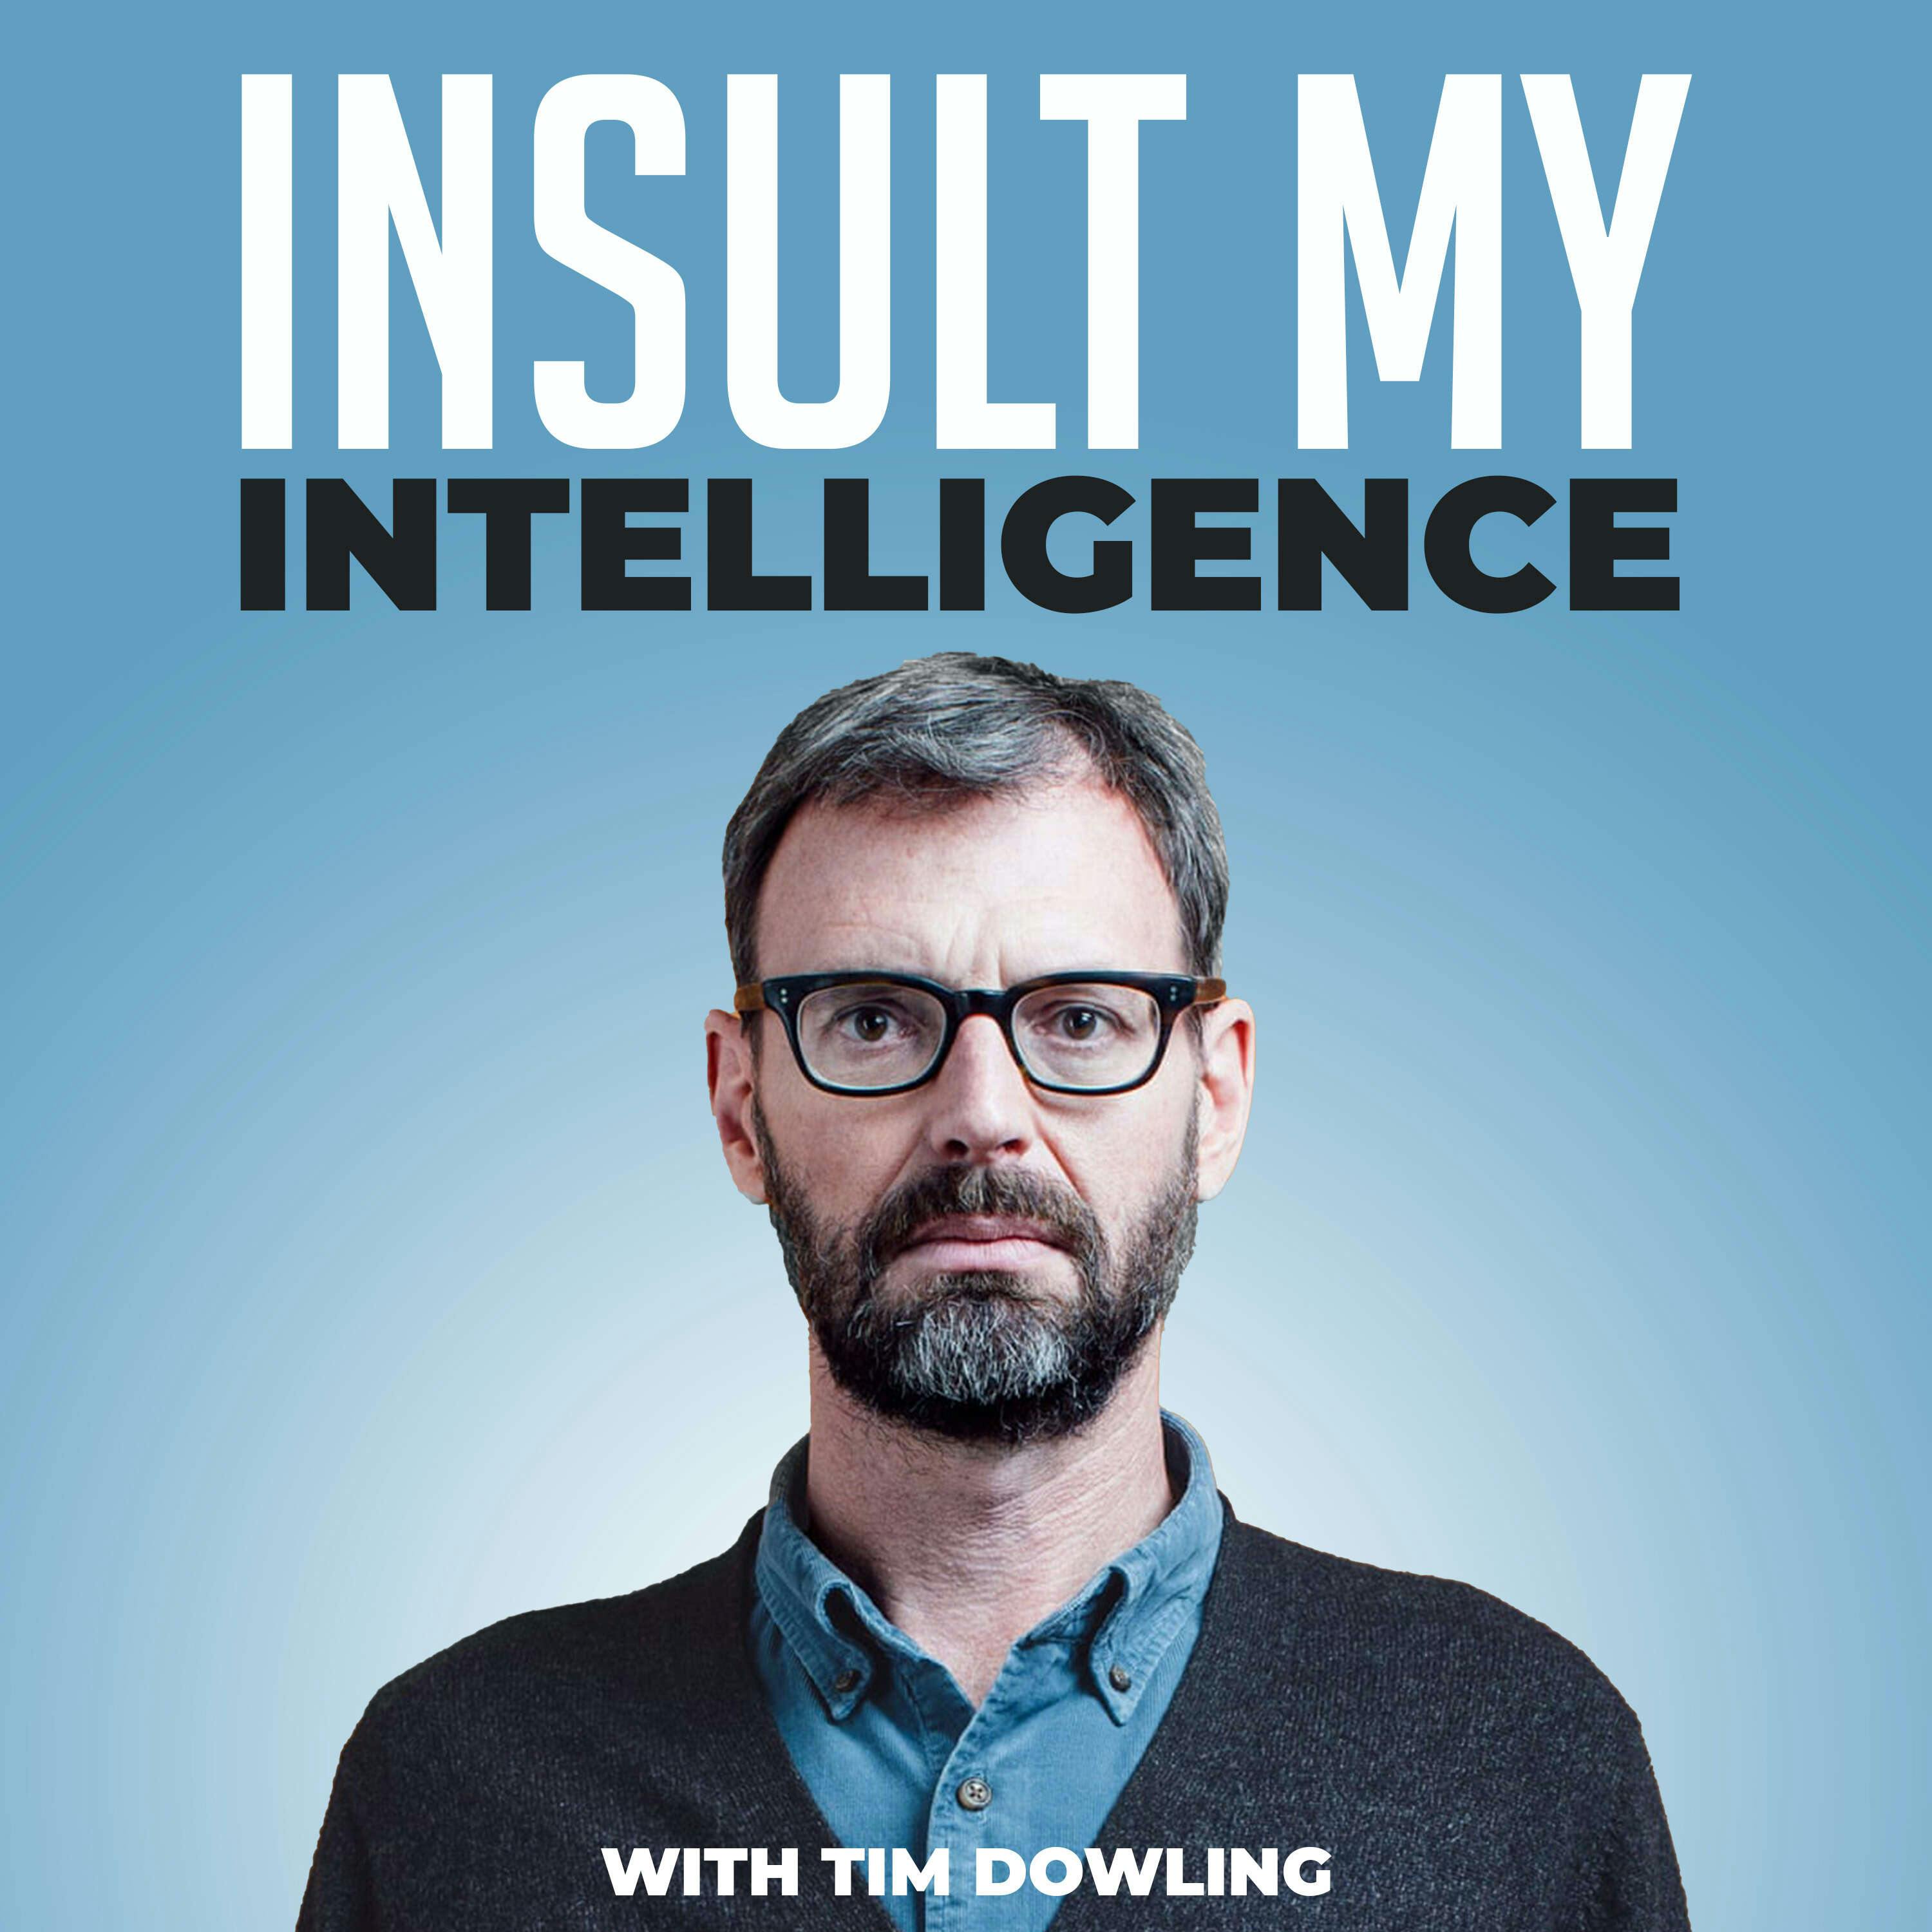 Insult My Intelligence